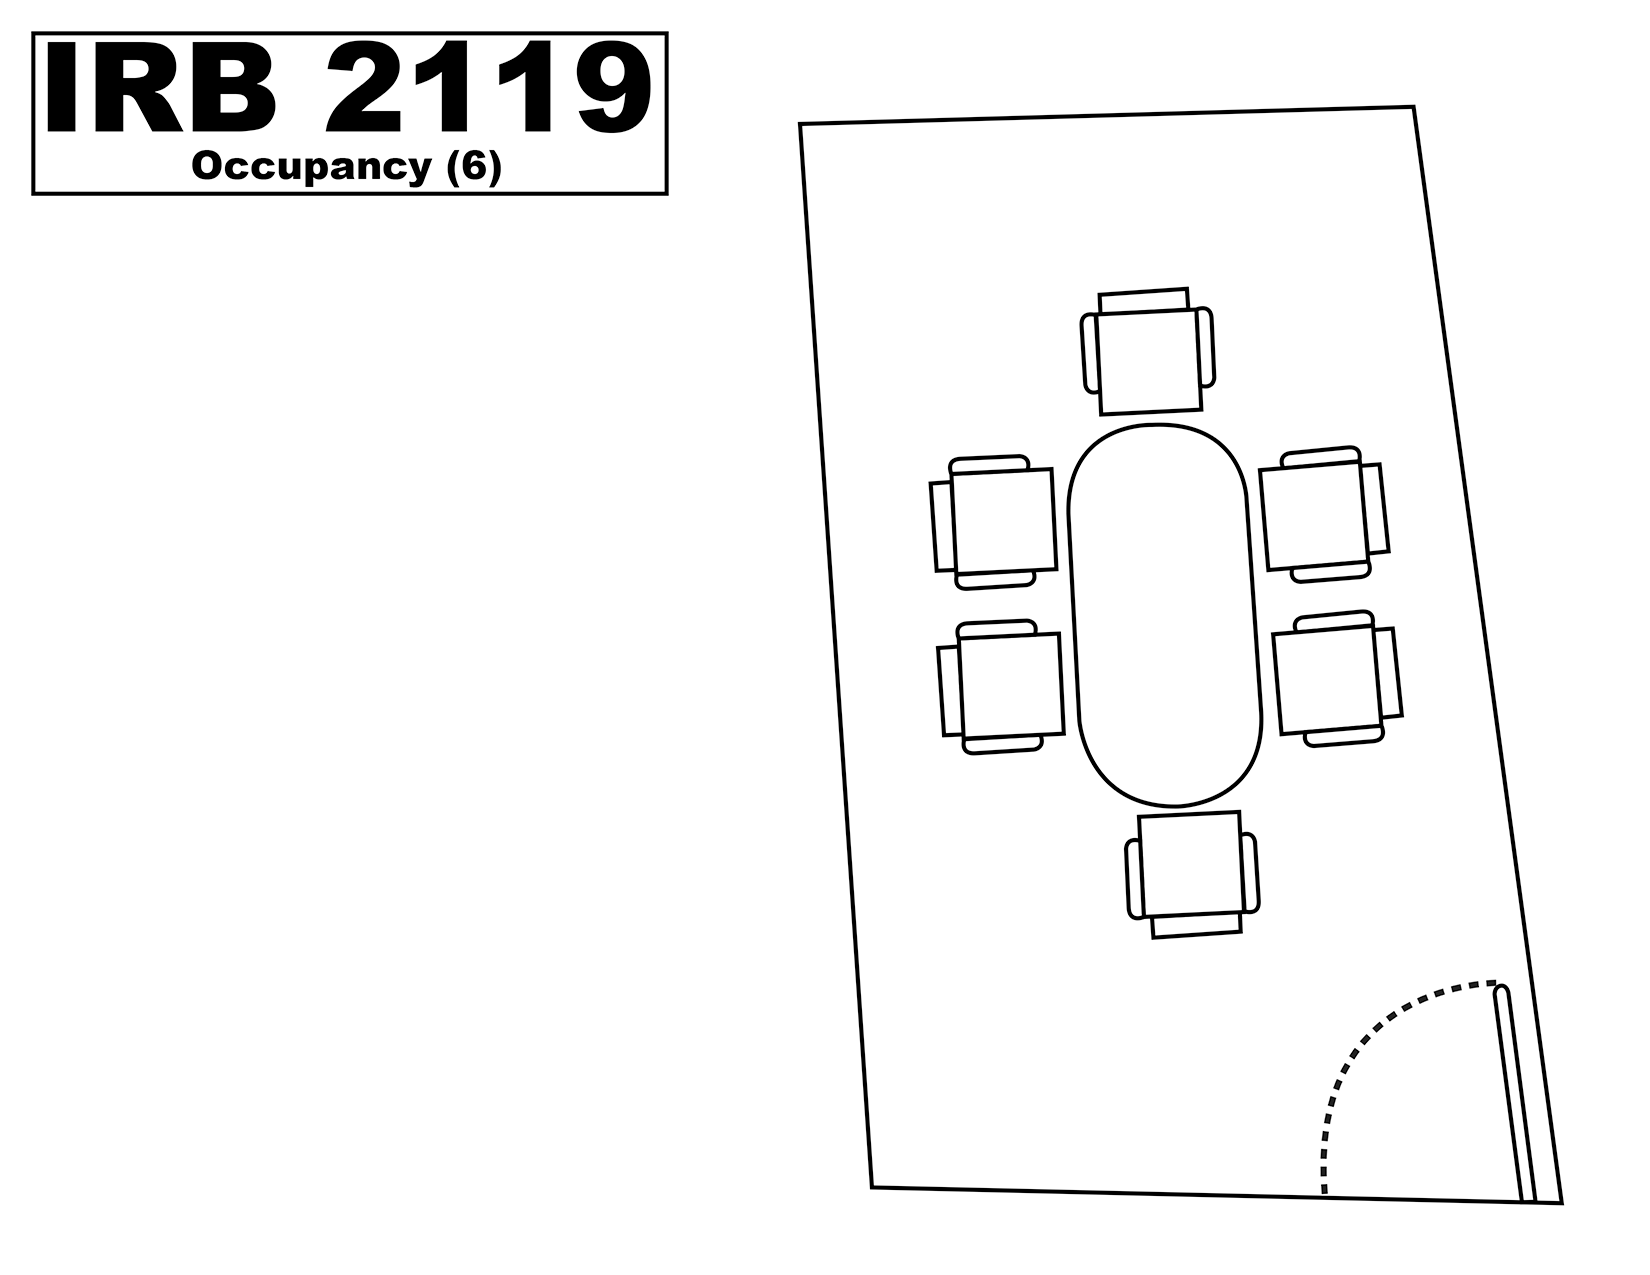 IRB2119 floorplan